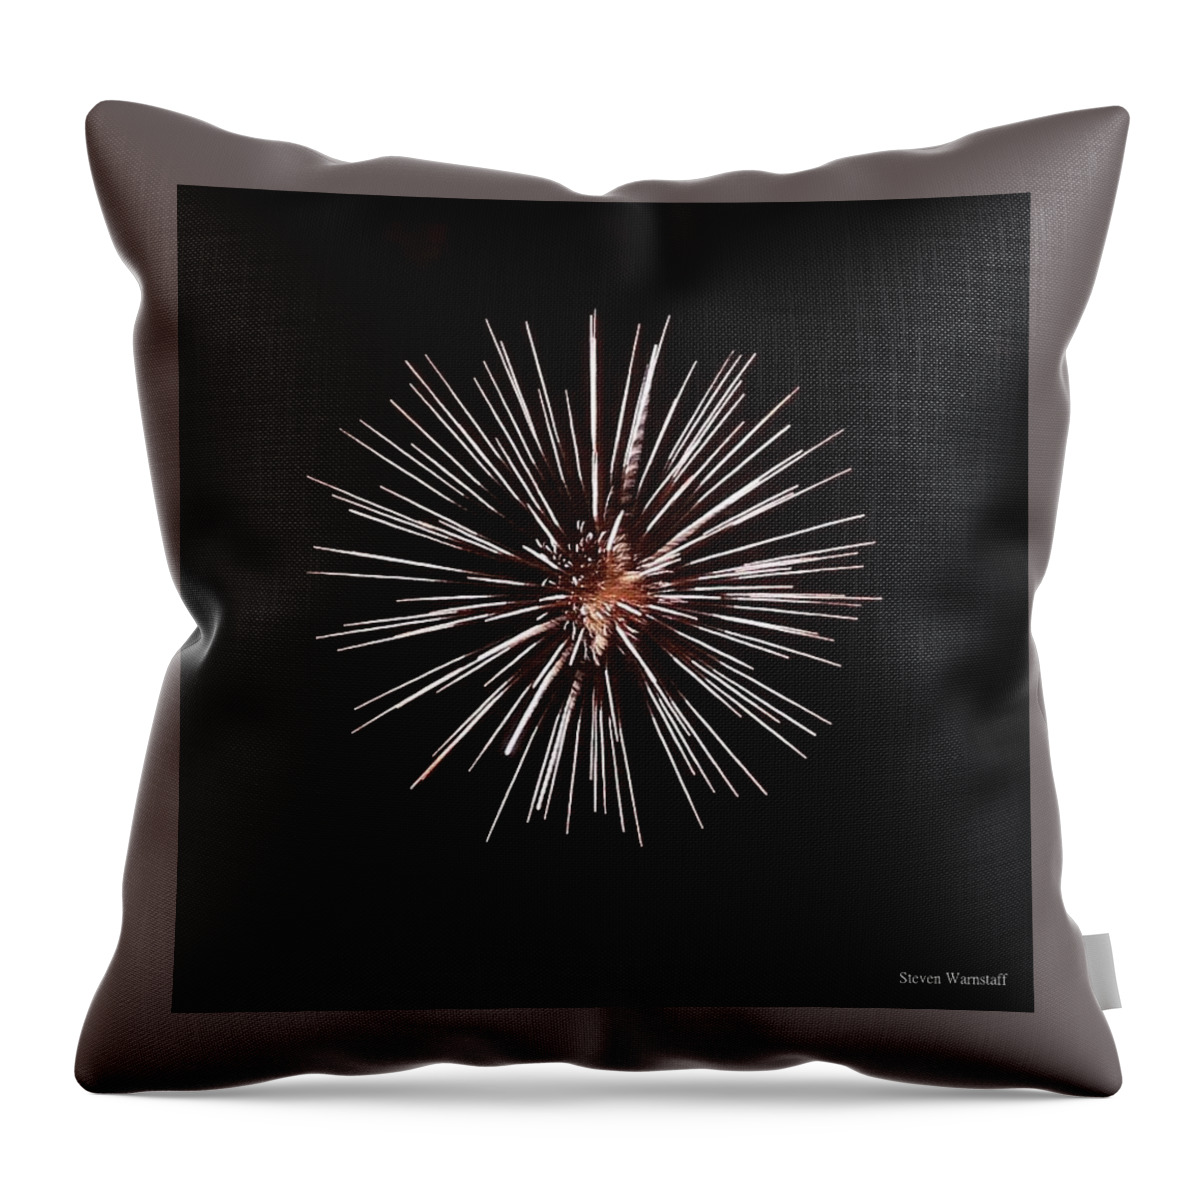 Oregon Throw Pillow featuring the photograph Starburst by Steve Warnstaff